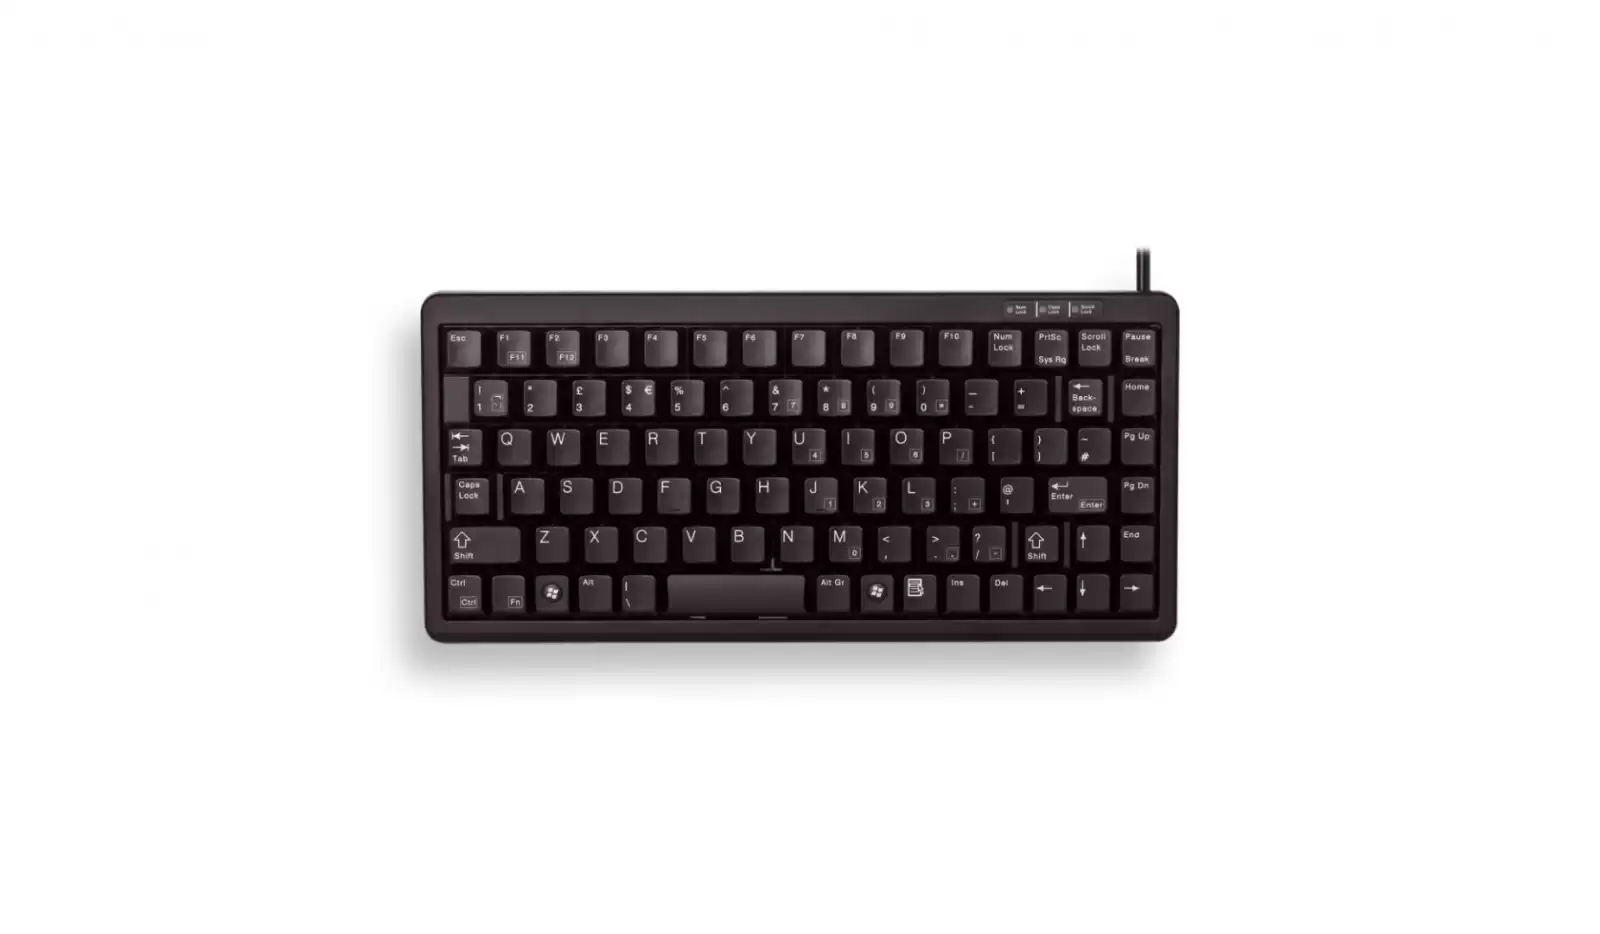 Cherry G84-4100 Compact Keyboard Black UK